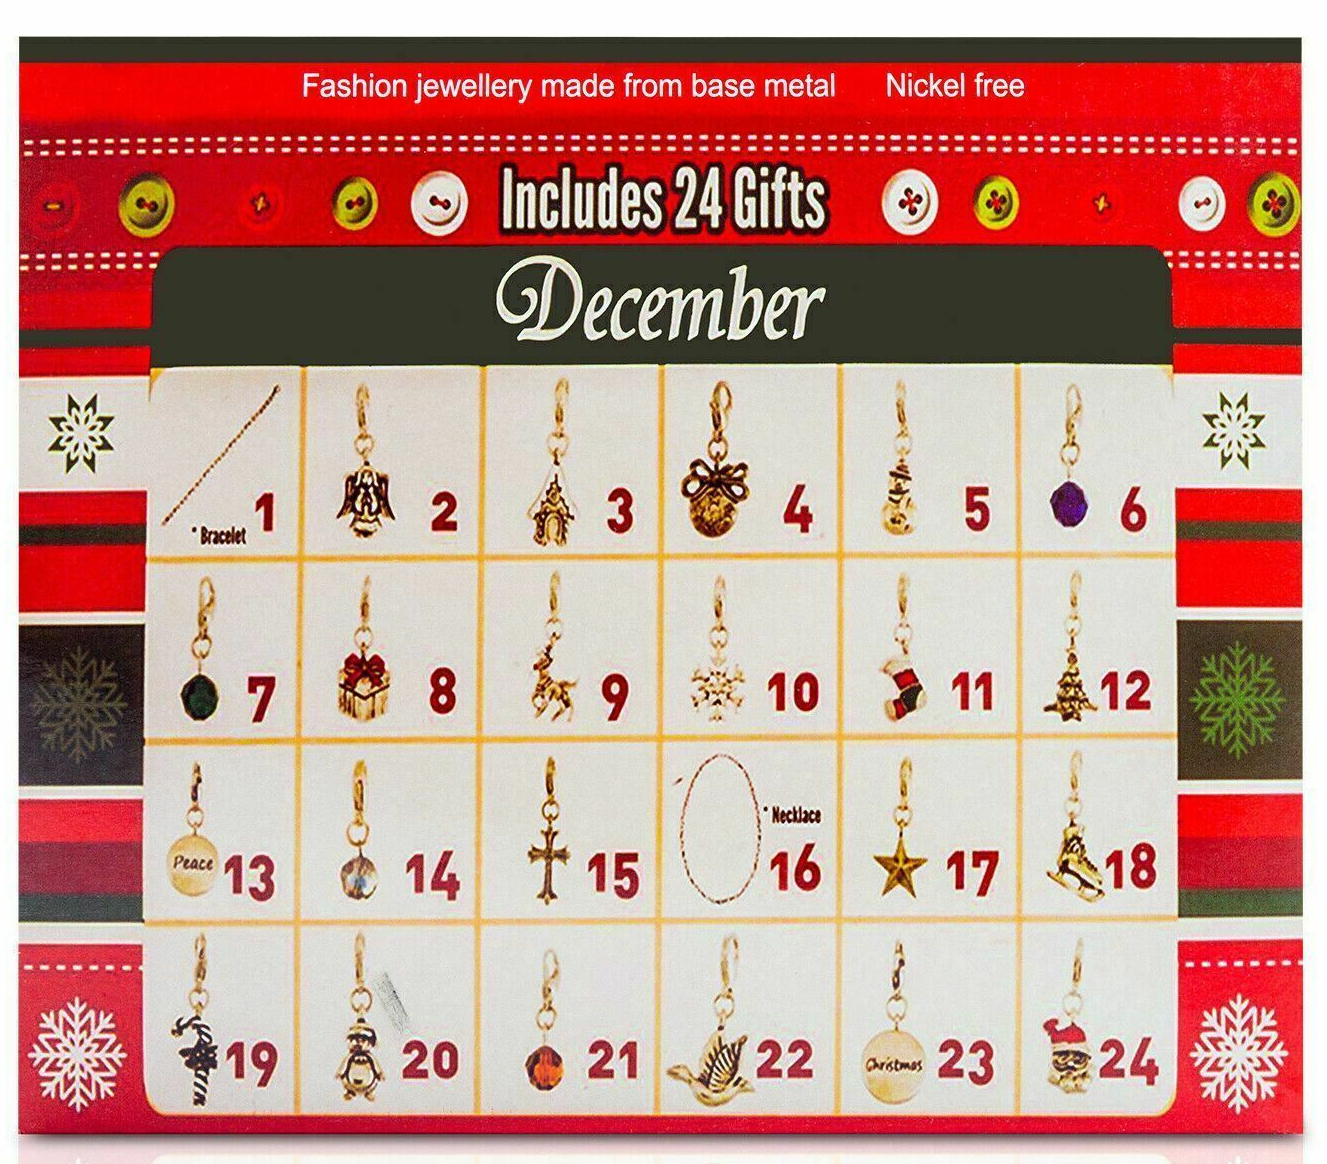 The Range Christmas Countdown 24 days Red Advent Calendar, DIY Necklace Bracelet For Christmas